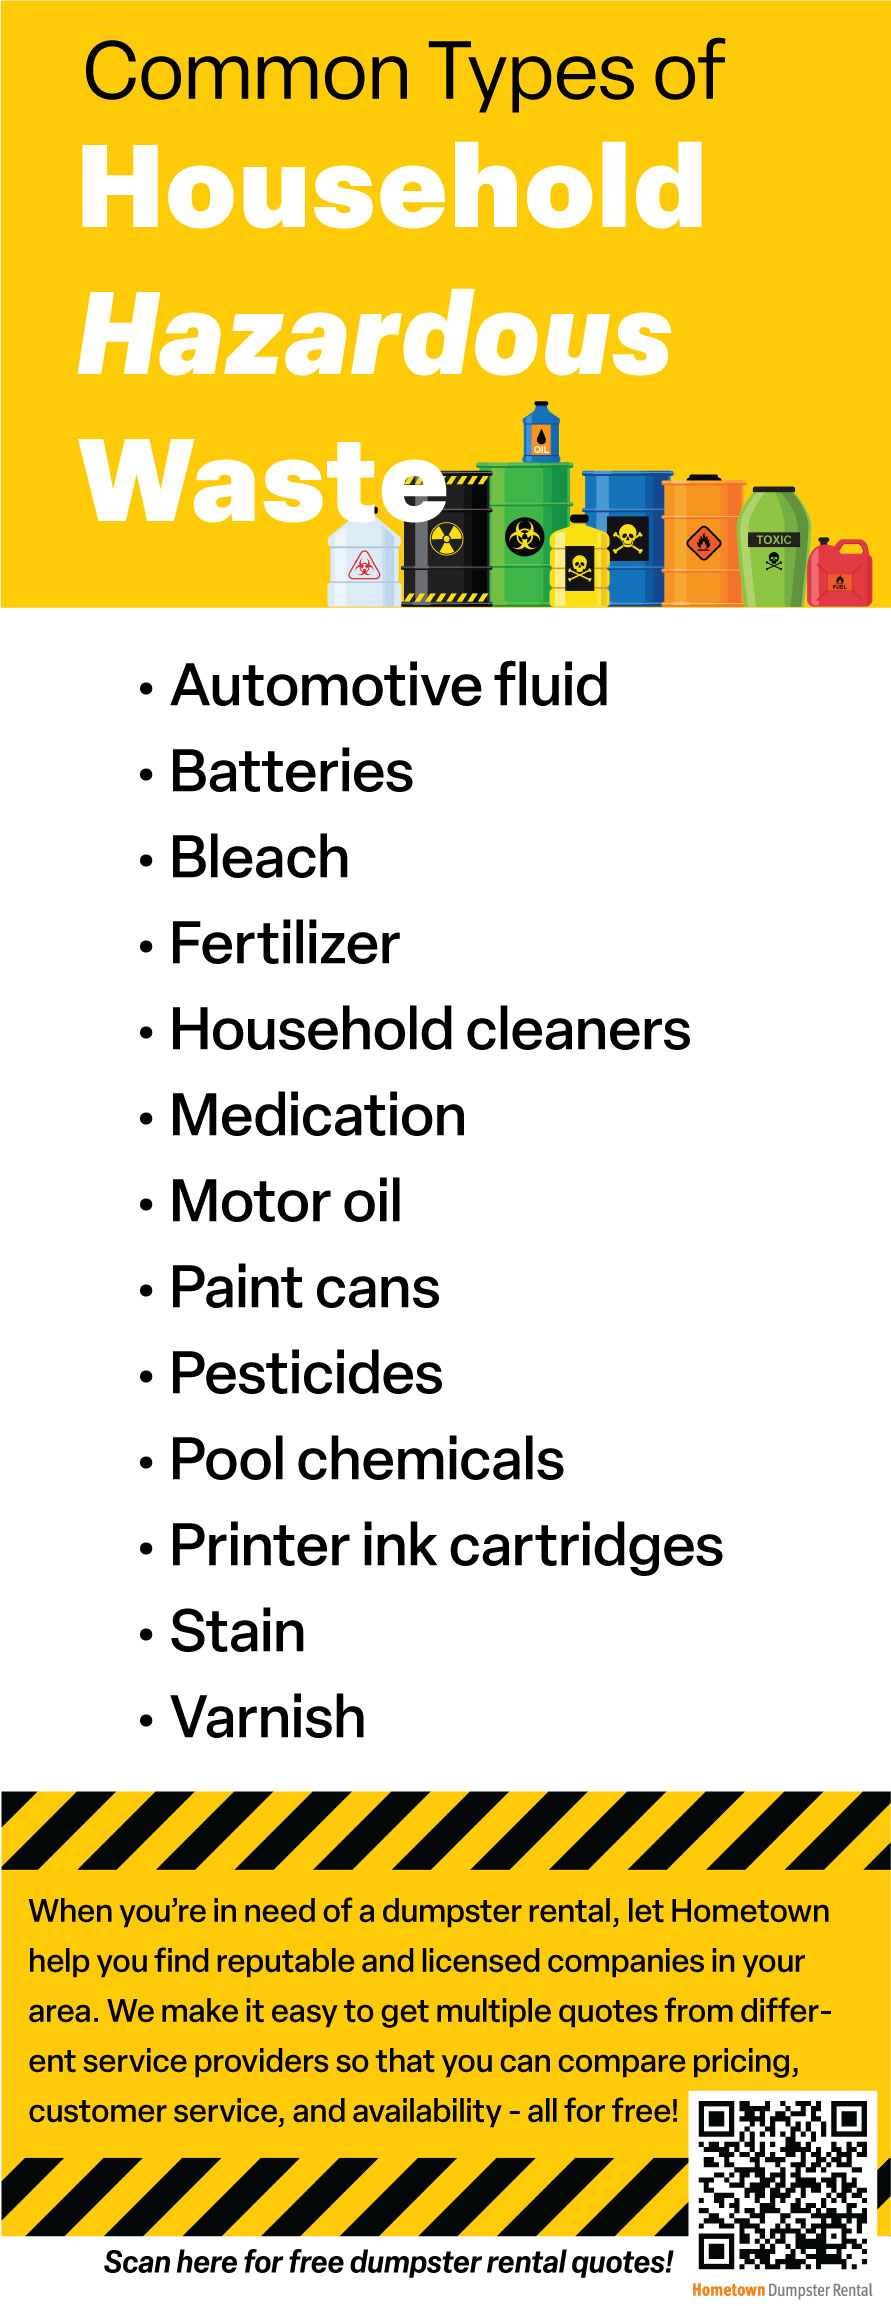 Common Types of Household Hazardous Waste Infographic